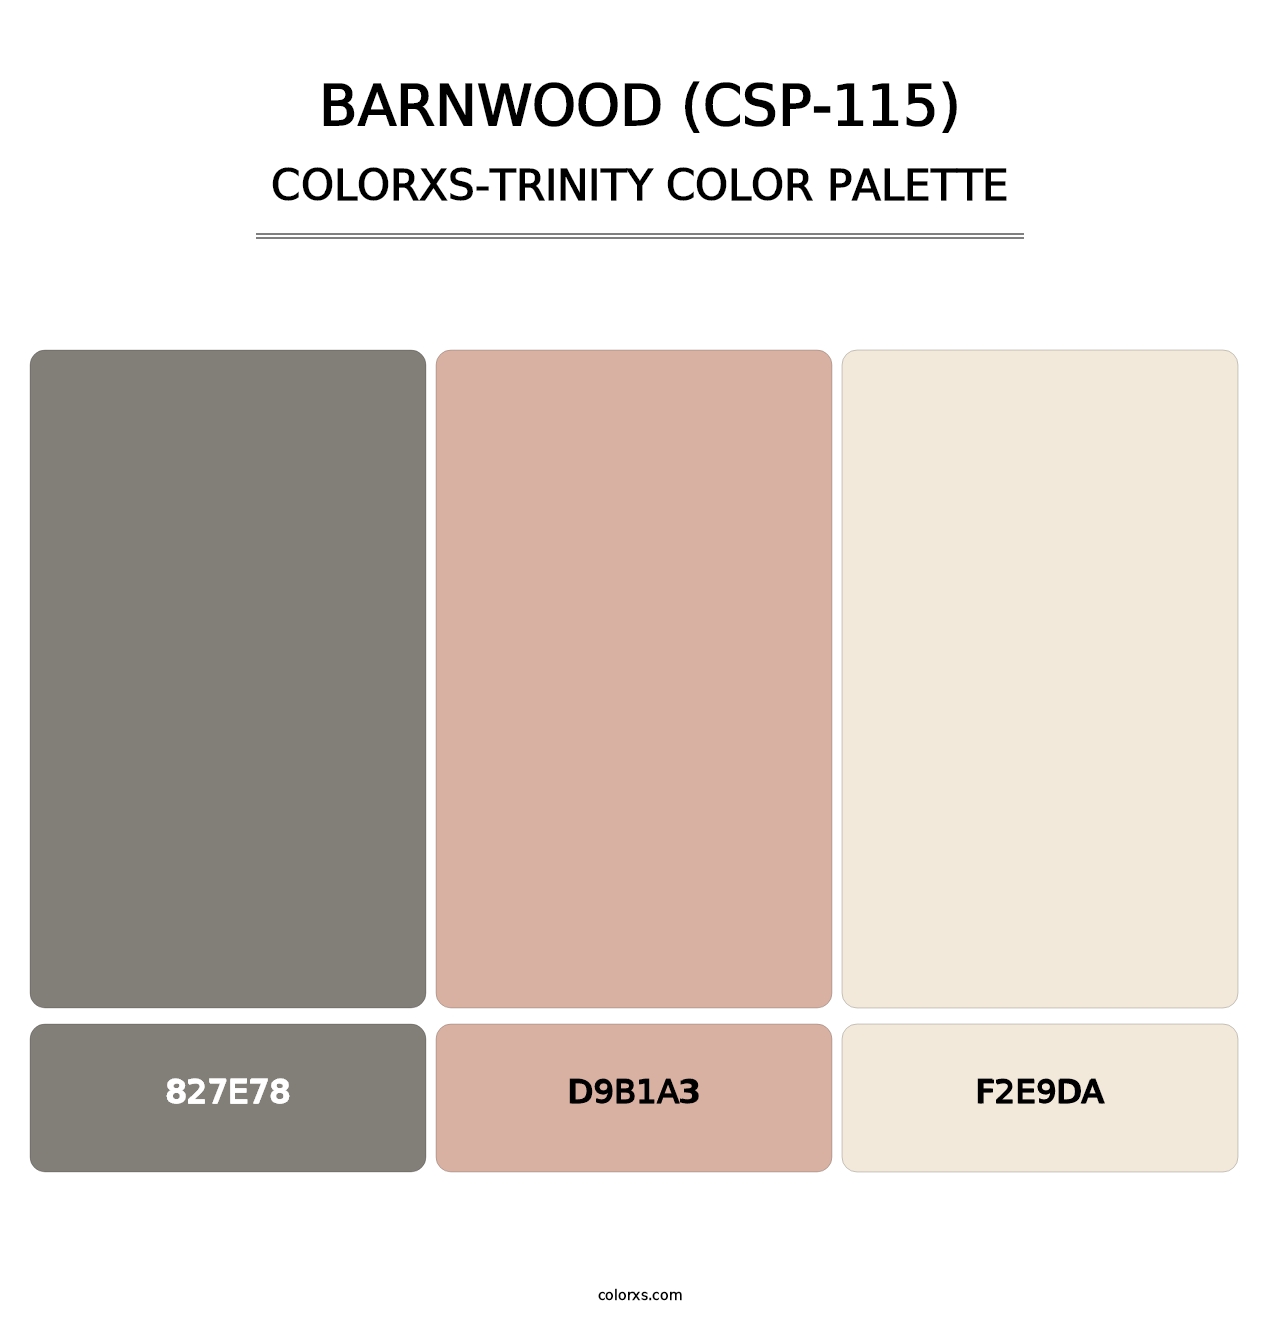 Barnwood (CSP-115) - Colorxs Trinity Palette